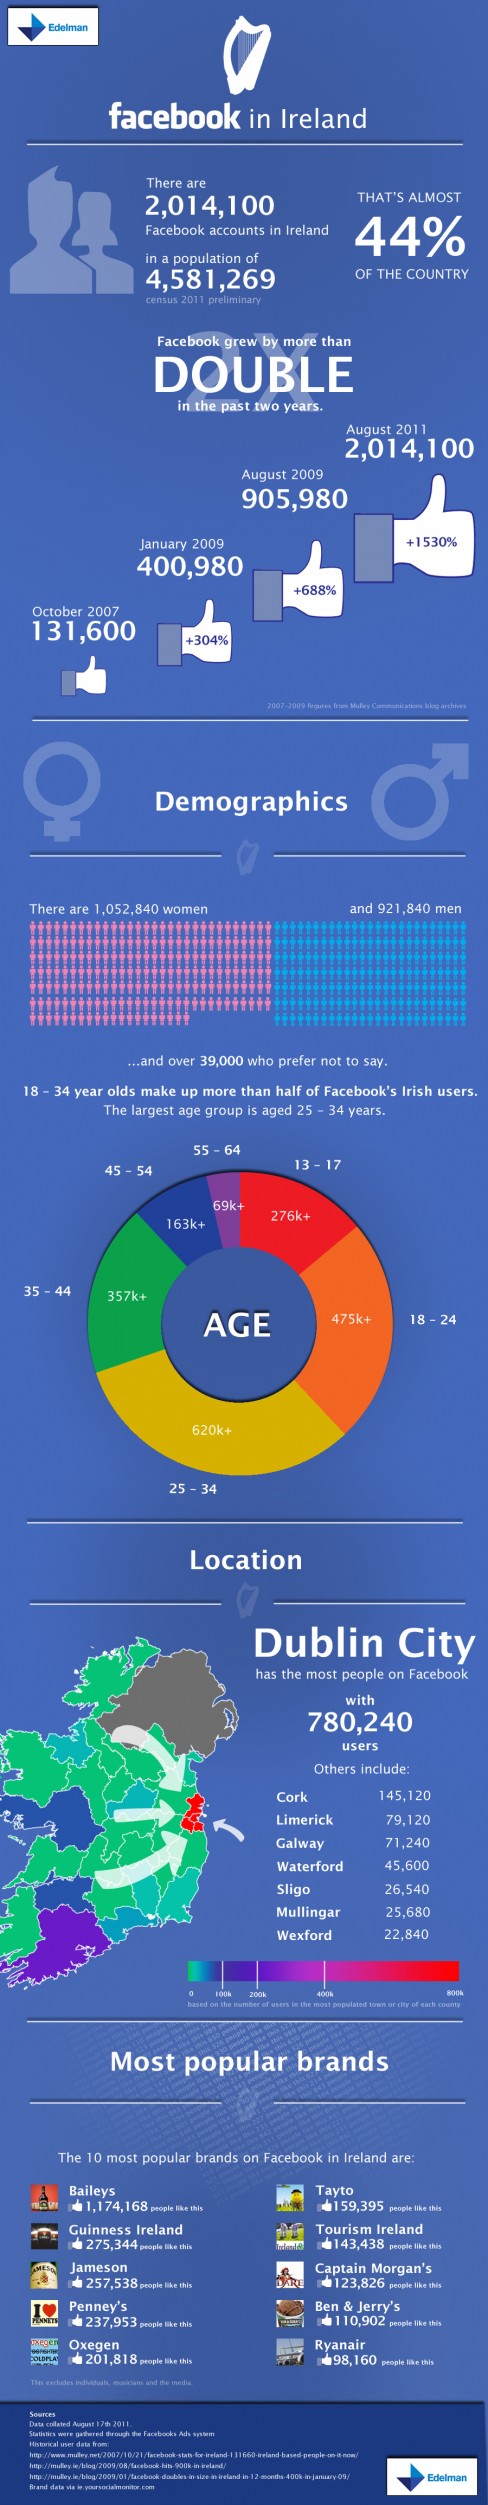 Irish Facebook statistics for August 2011 from Edelman